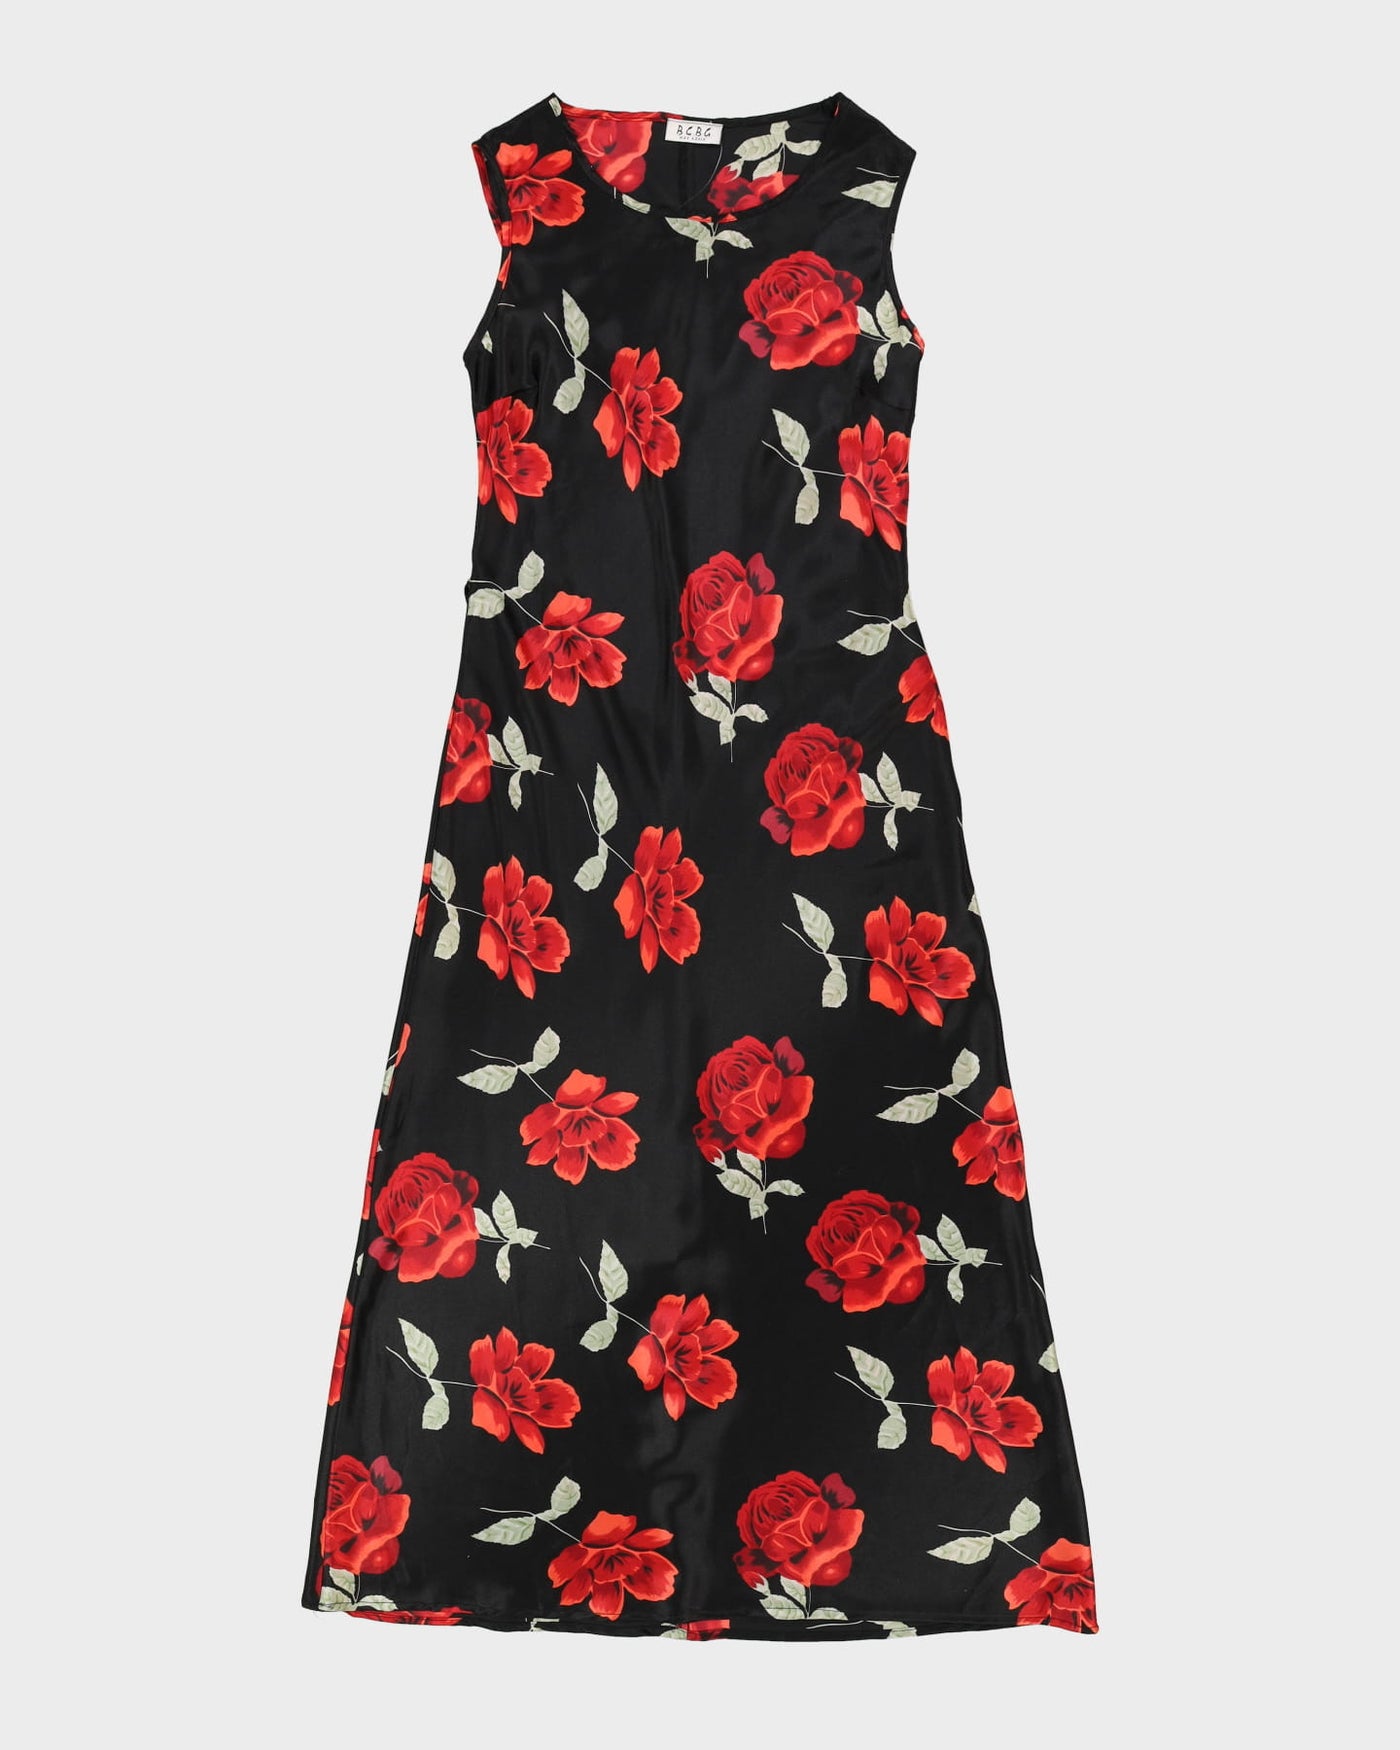 BCBG Black With Red Roses Dress - L